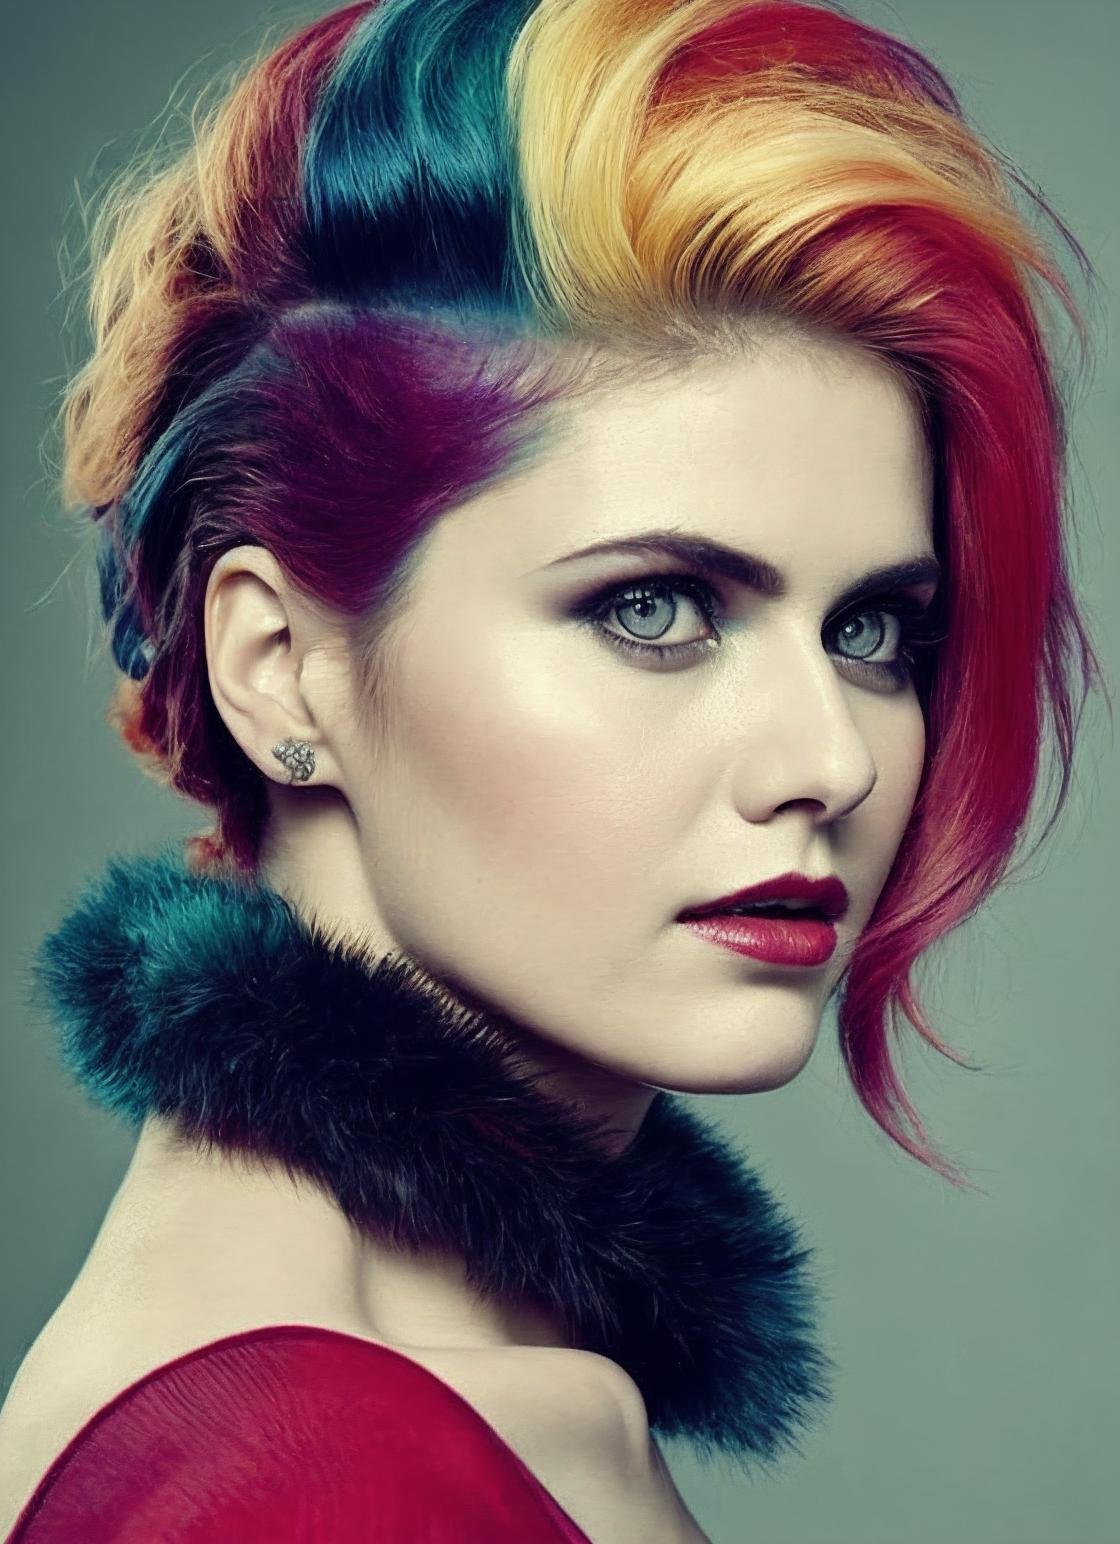 portrait of sks woman by Flora Borsi, style by Flora Borsi, bold, bright colours, rainbow Mohawk haircut, ((Flora Borsi)), <lora:locon_alexandra_v2_from_v2_64_32:1.25>